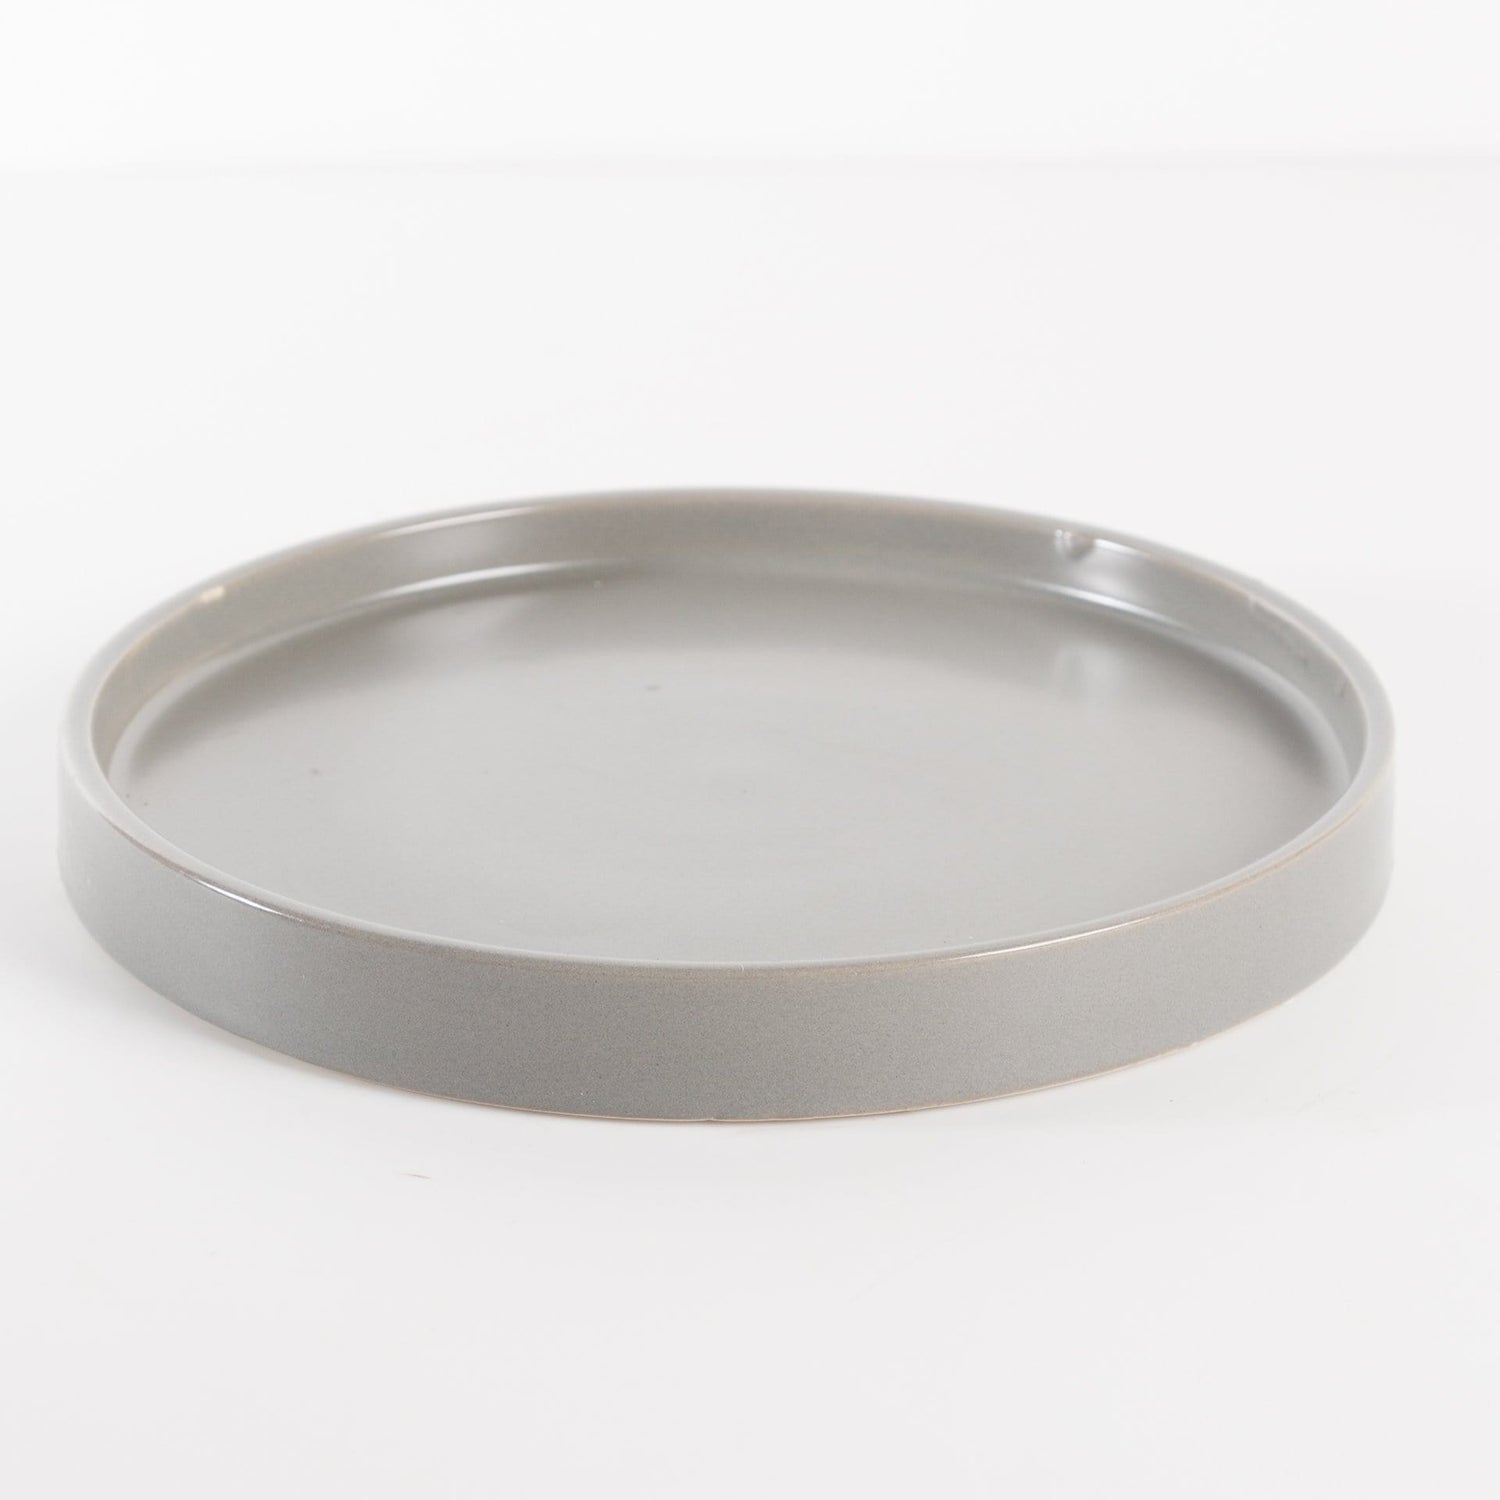 Washington Pottery Company Saucer 7.25" / Grey Essential Saucer